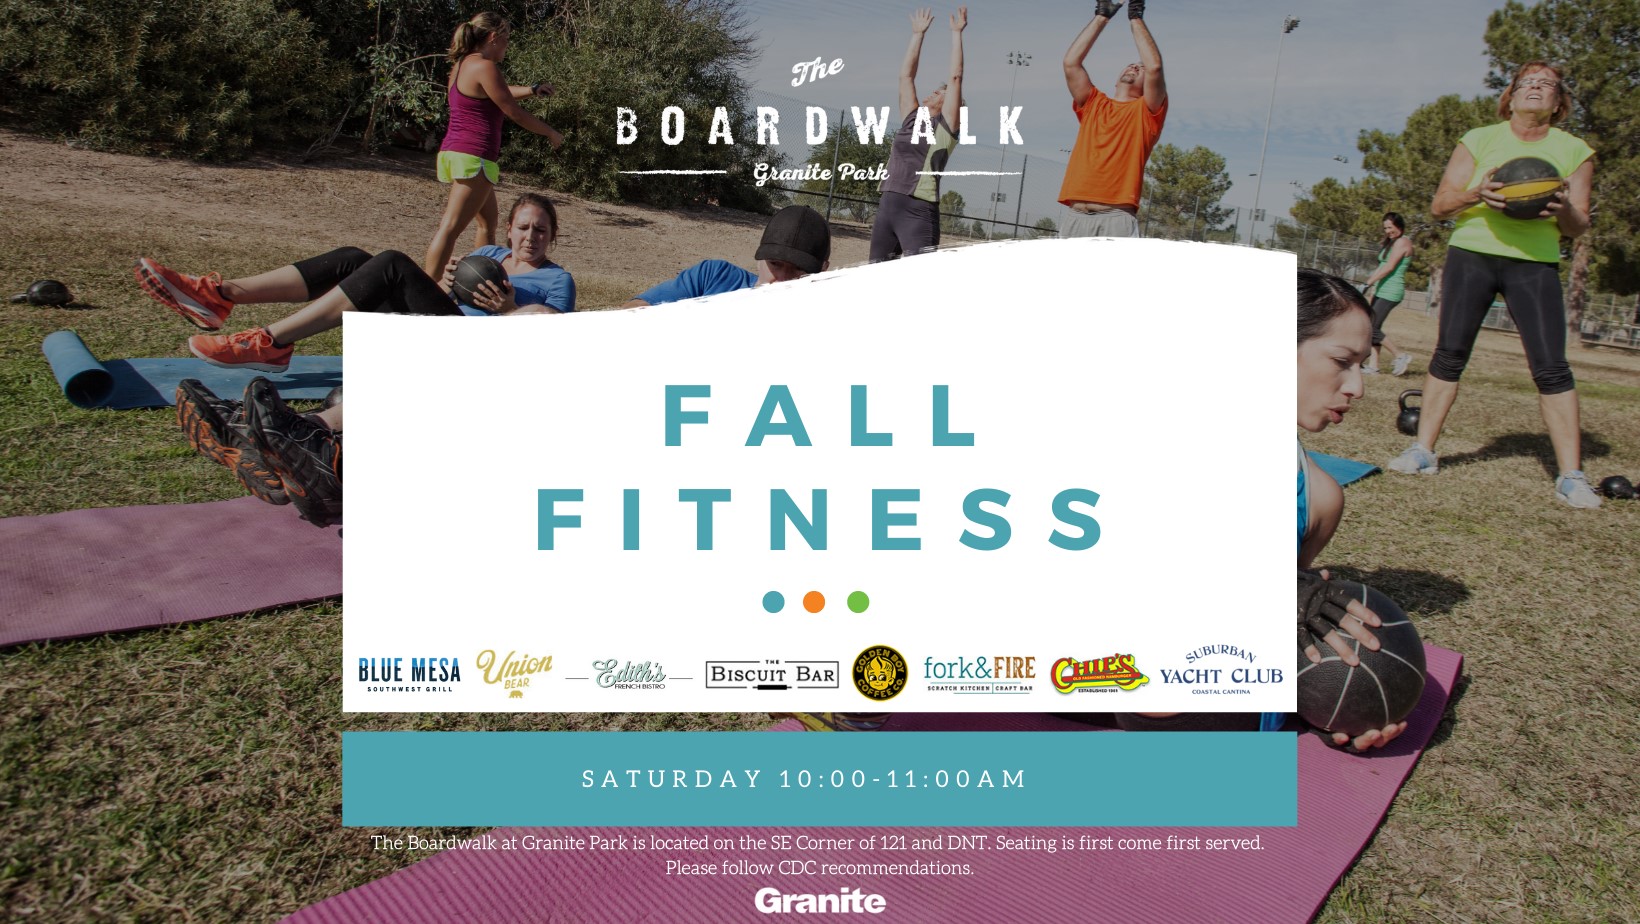 Fall Fitness at the Boardwalk